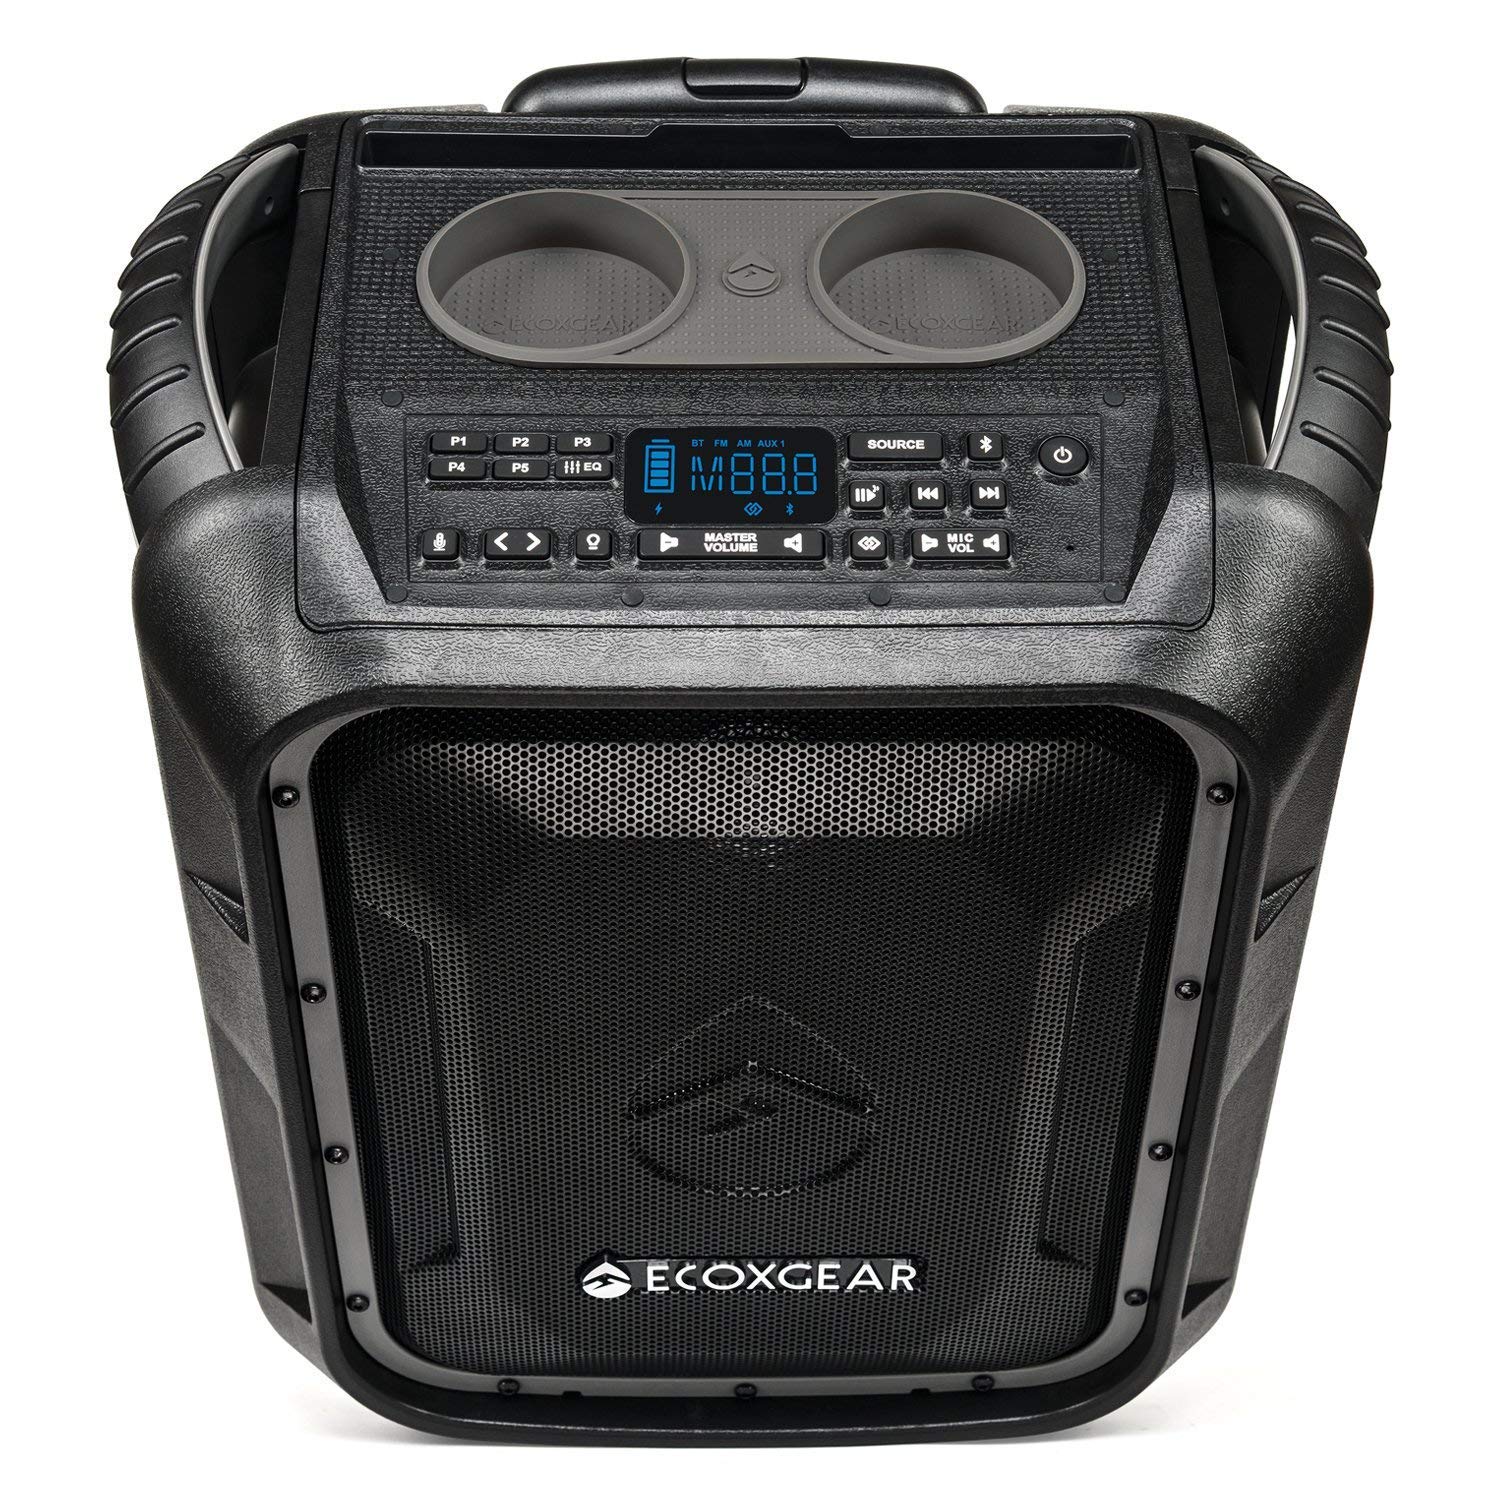 ECOXGEAR EcoBoulder+ GDI-EXBLD810 견고한 방수 플로팅 휴대용 블루투스 무선 100와트 스피커 및 PA 시스템(회색)